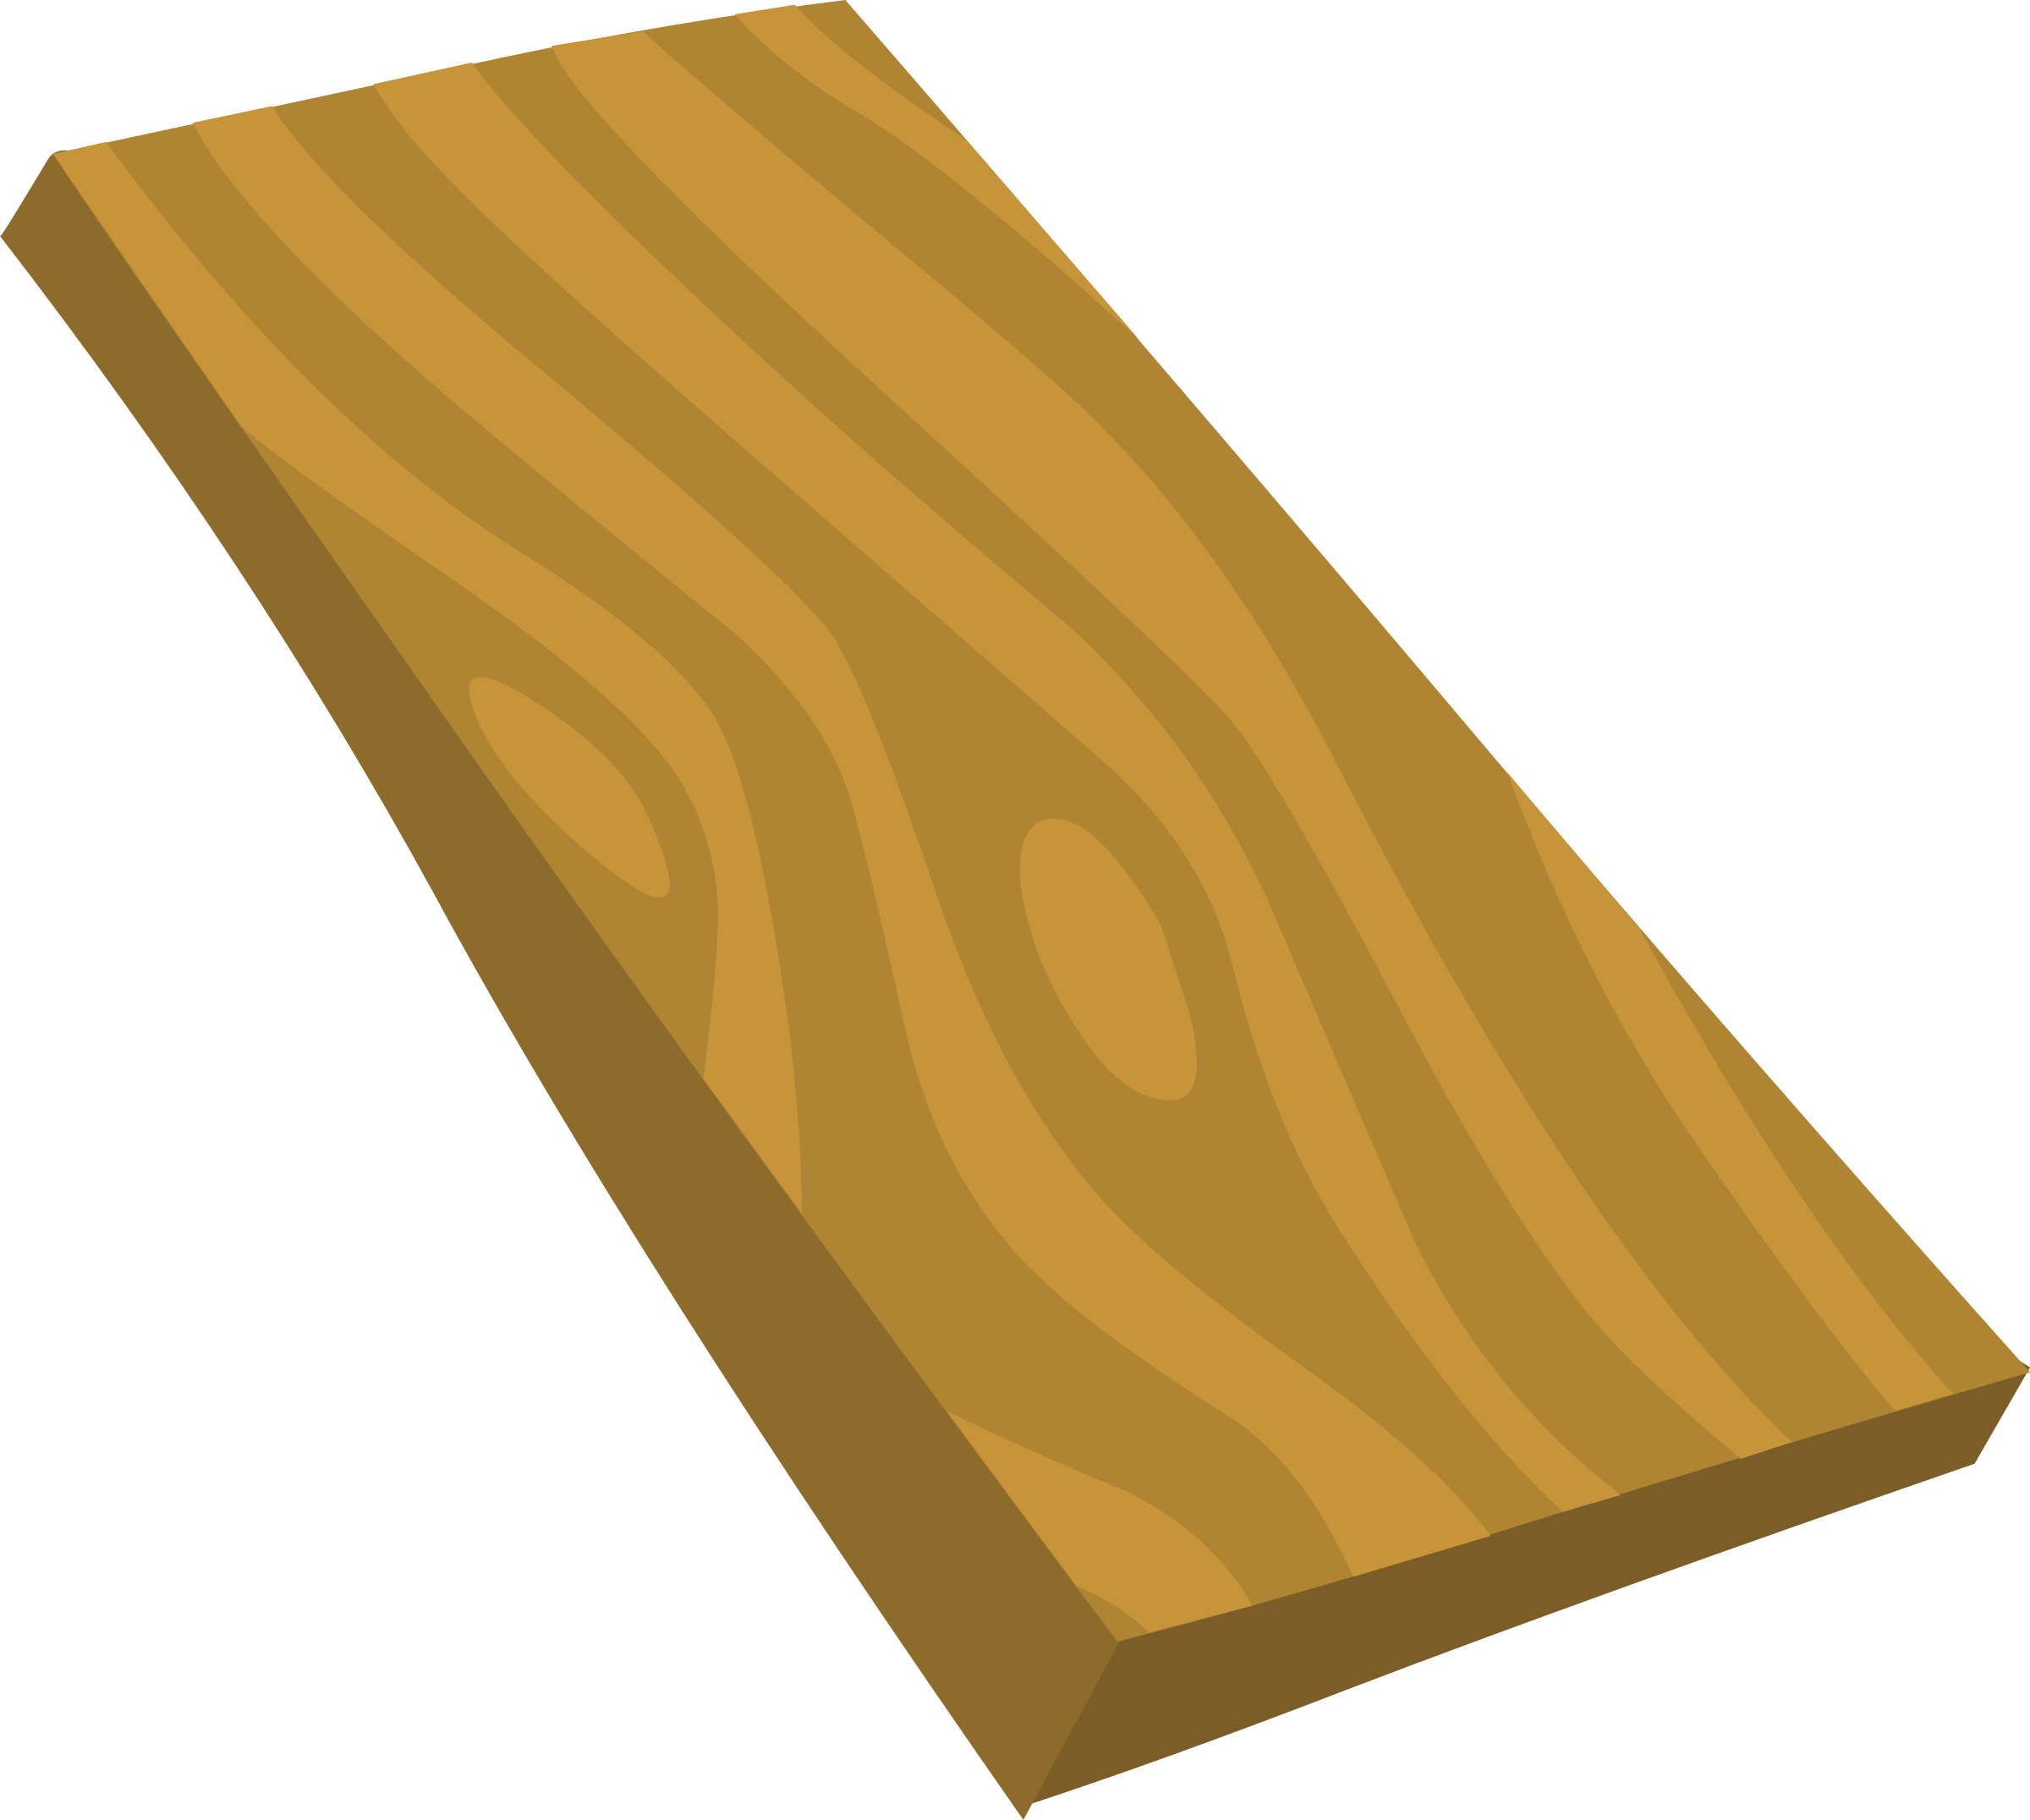 Wood board clipart.